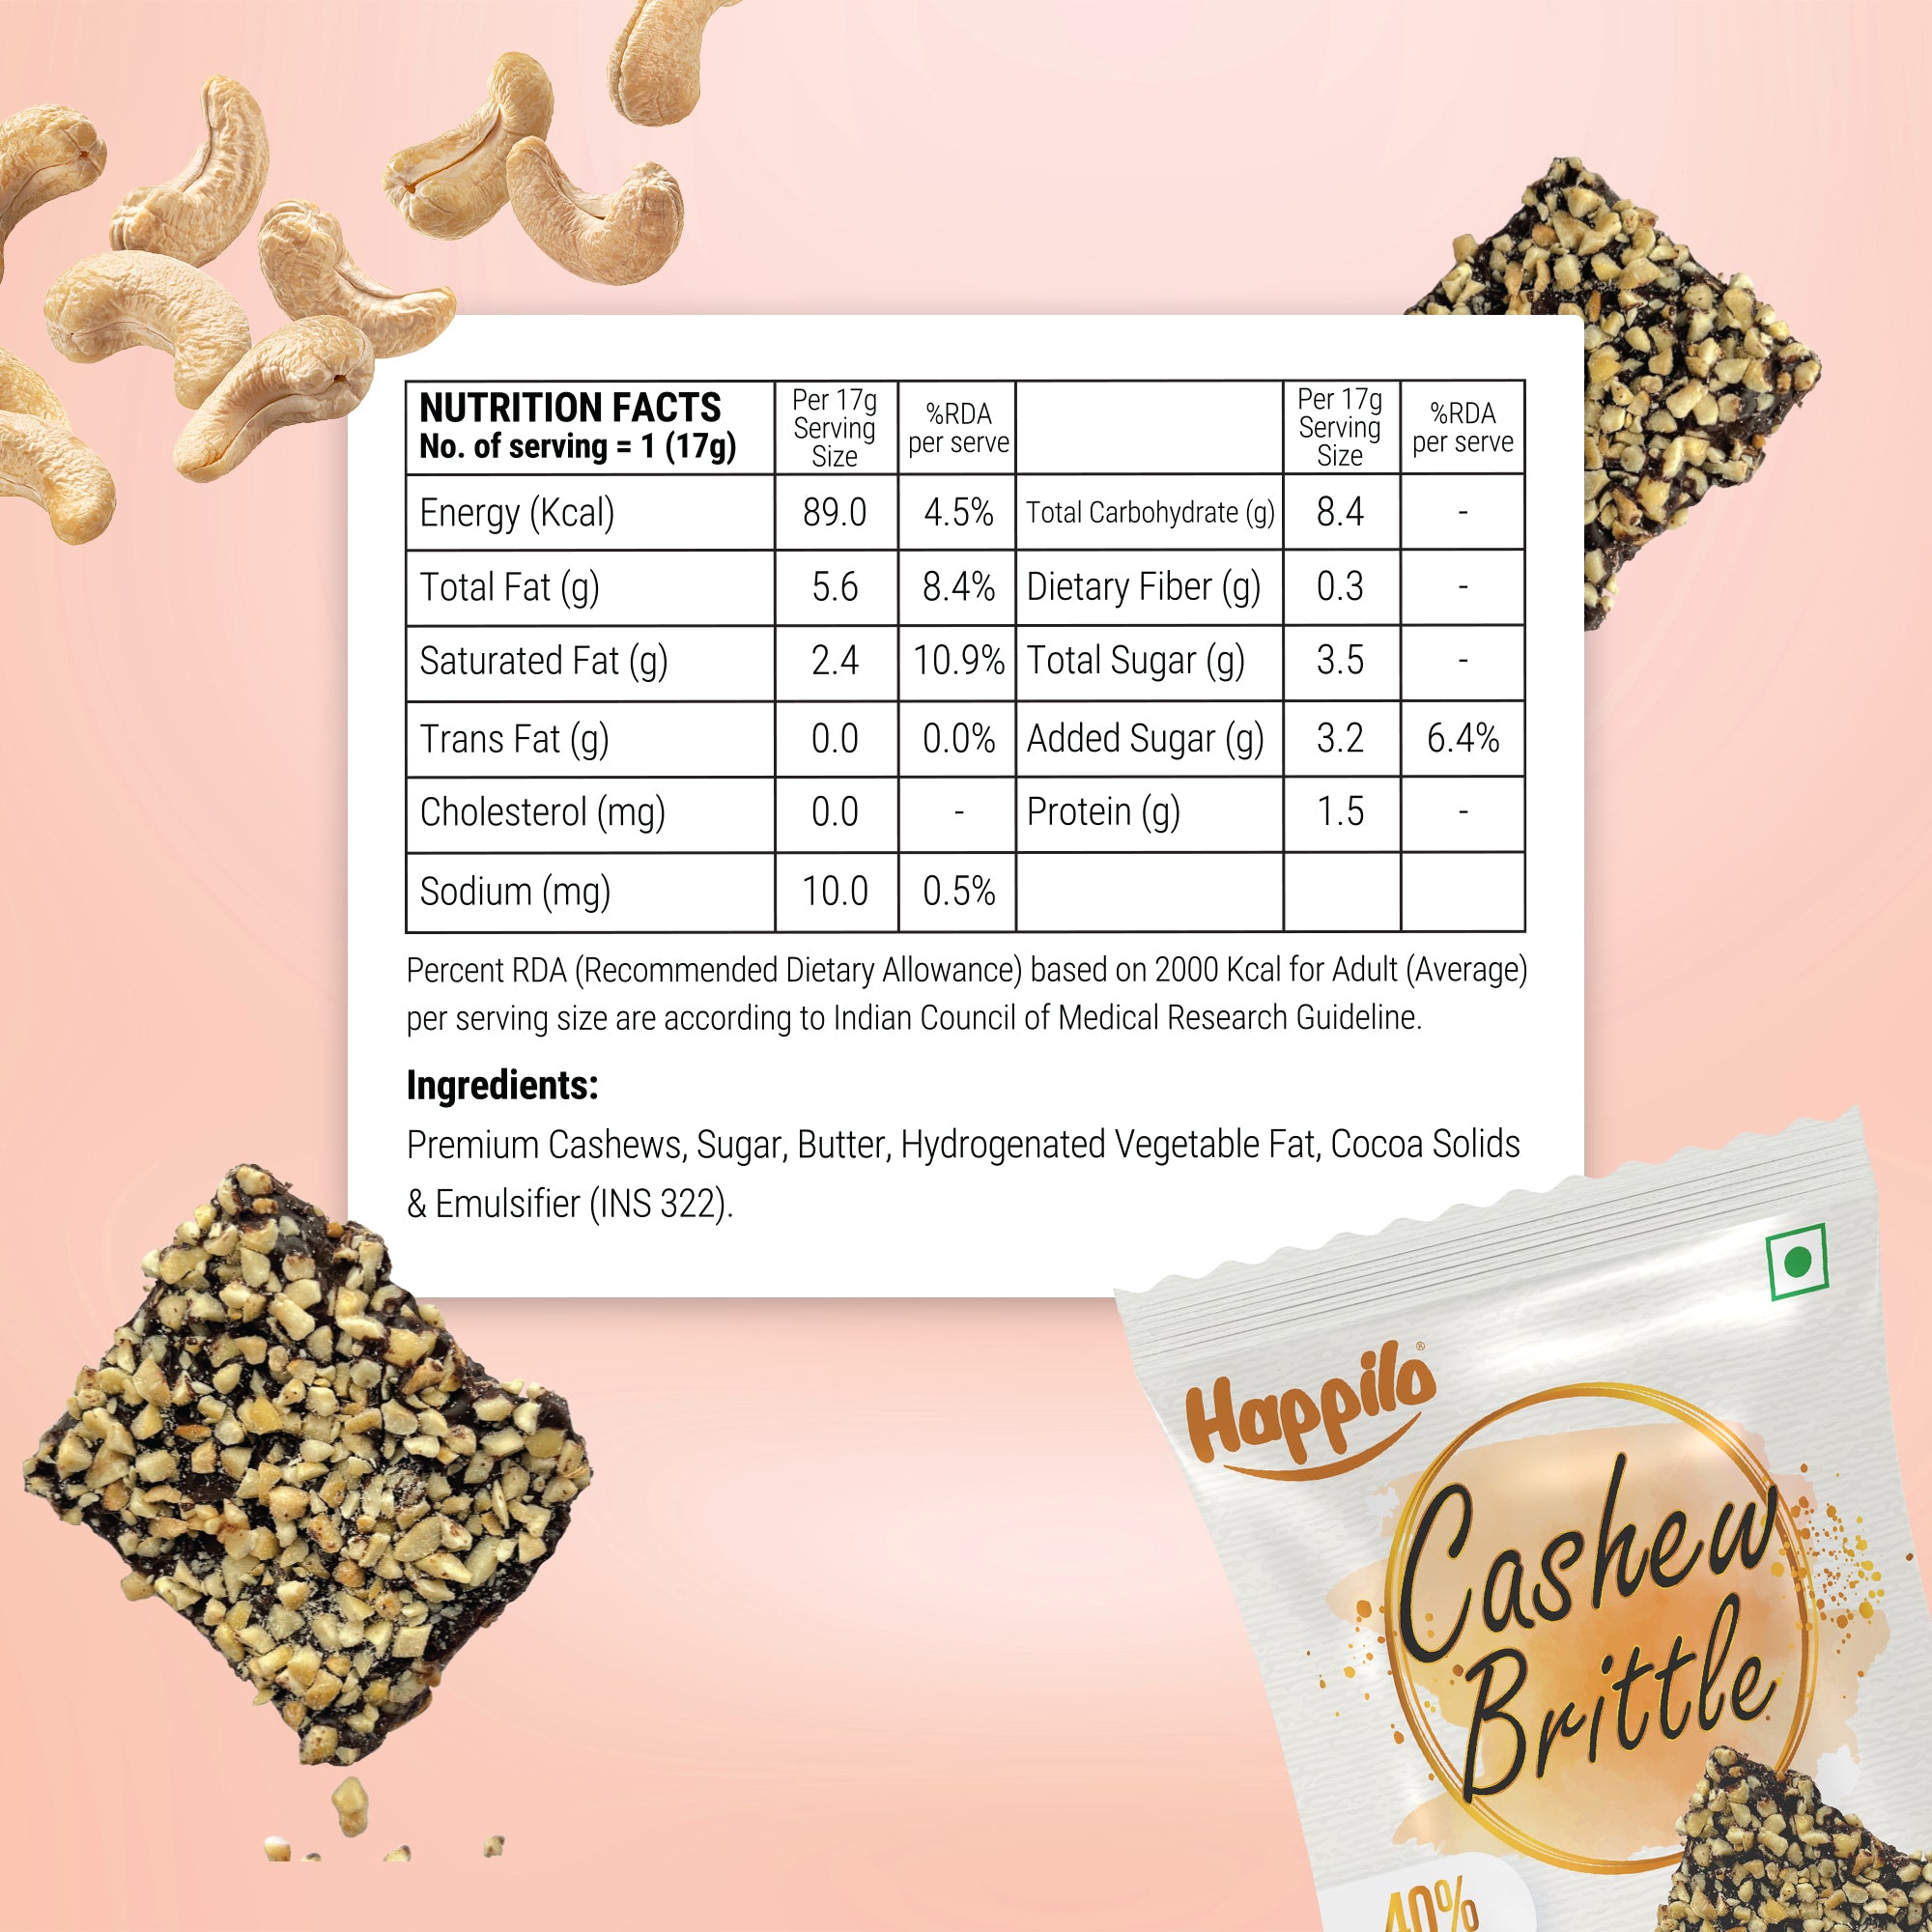 Happilo Premium Cashews Brittle Celebrations Pack 204g (17gX12)